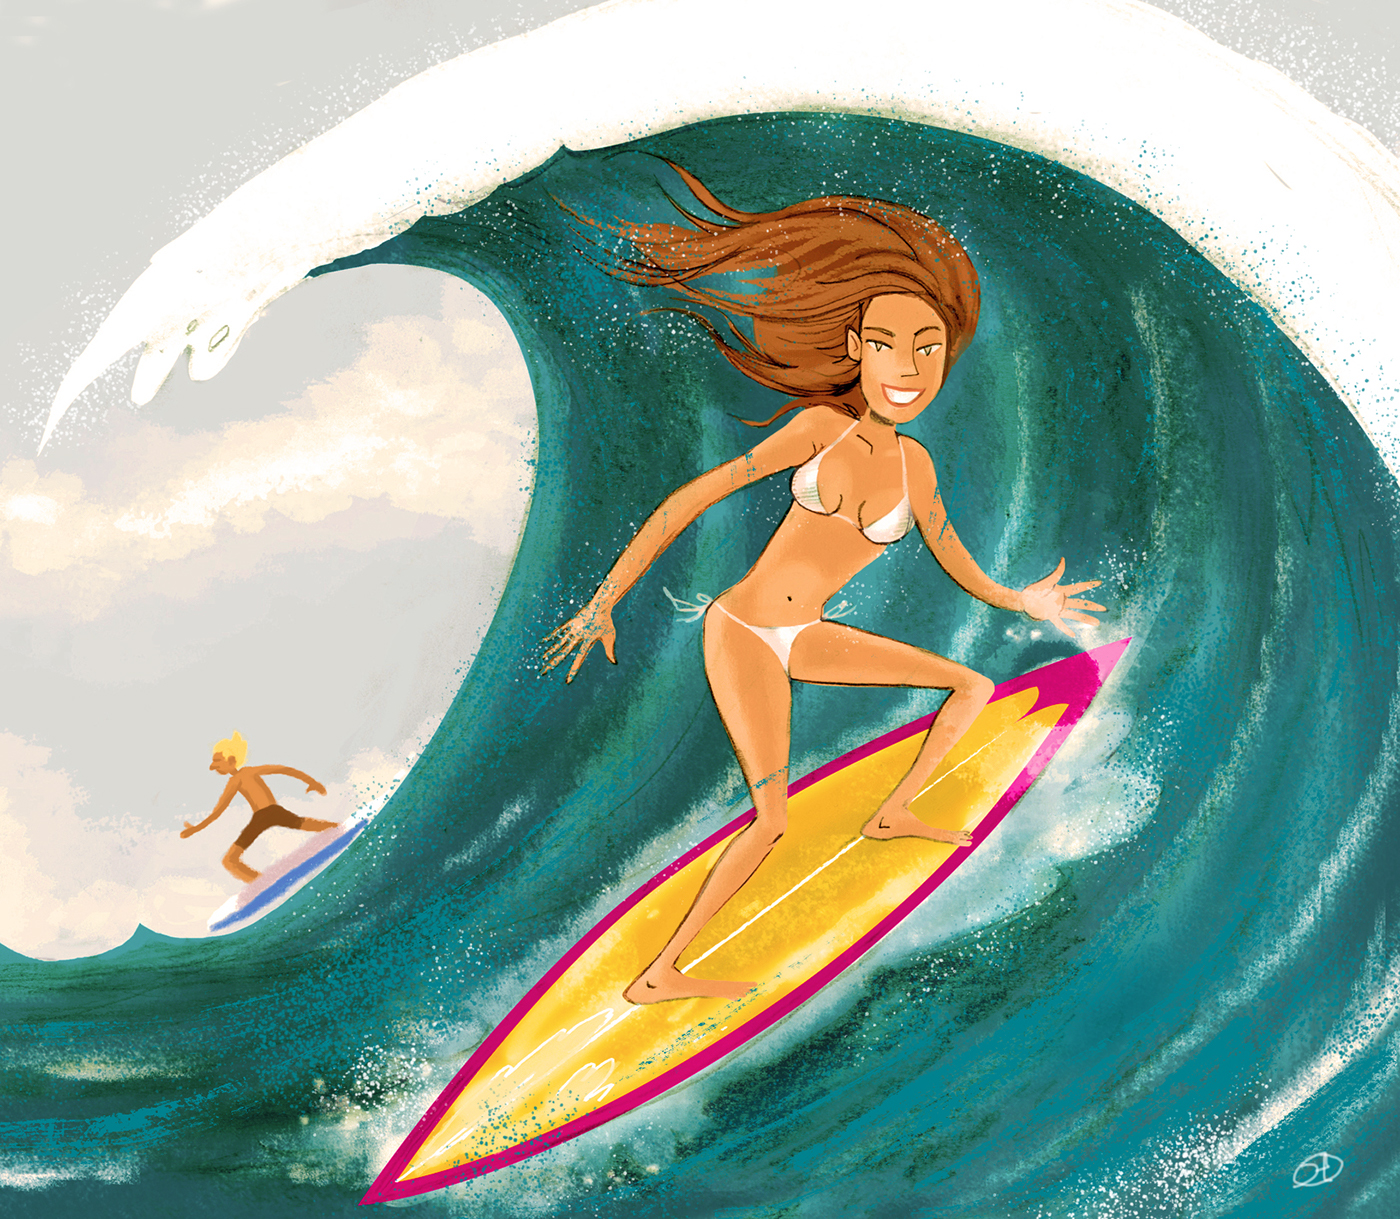 Surf surfer DigitalIllustration DAVIDHURTADO photoshop wave pencil cartoon characterdesign surfergirl